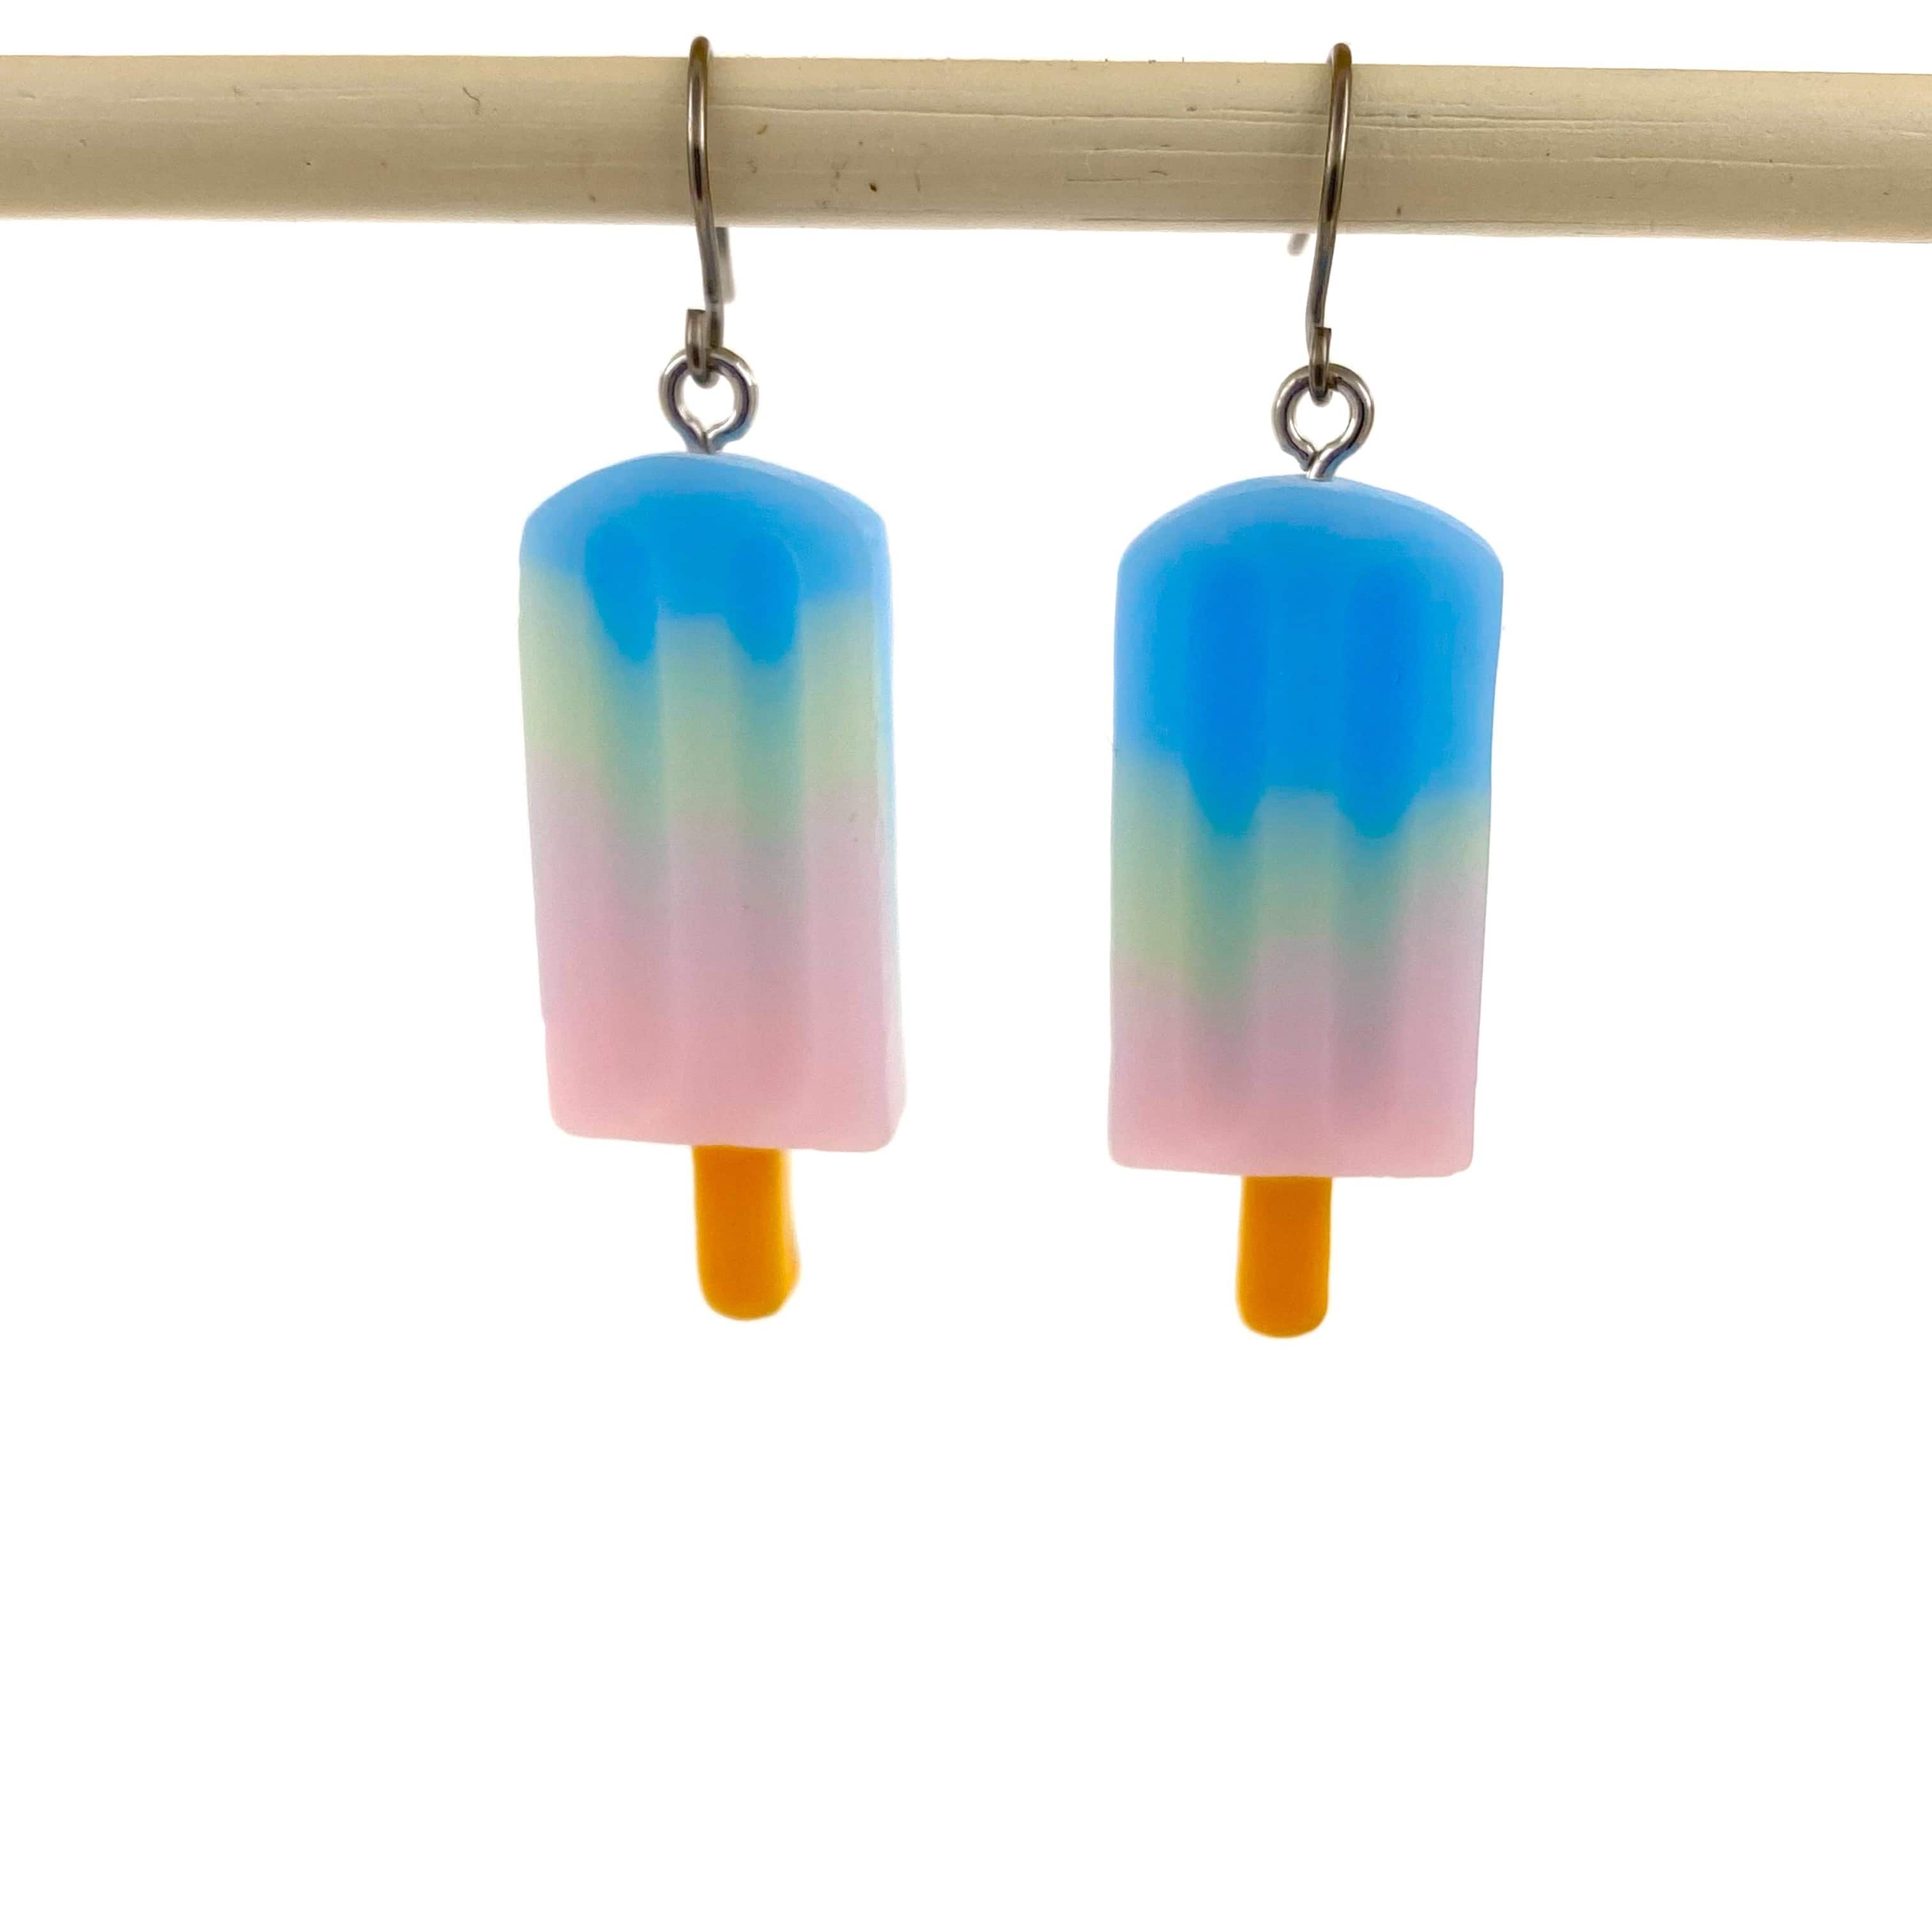 Popcicle earrings